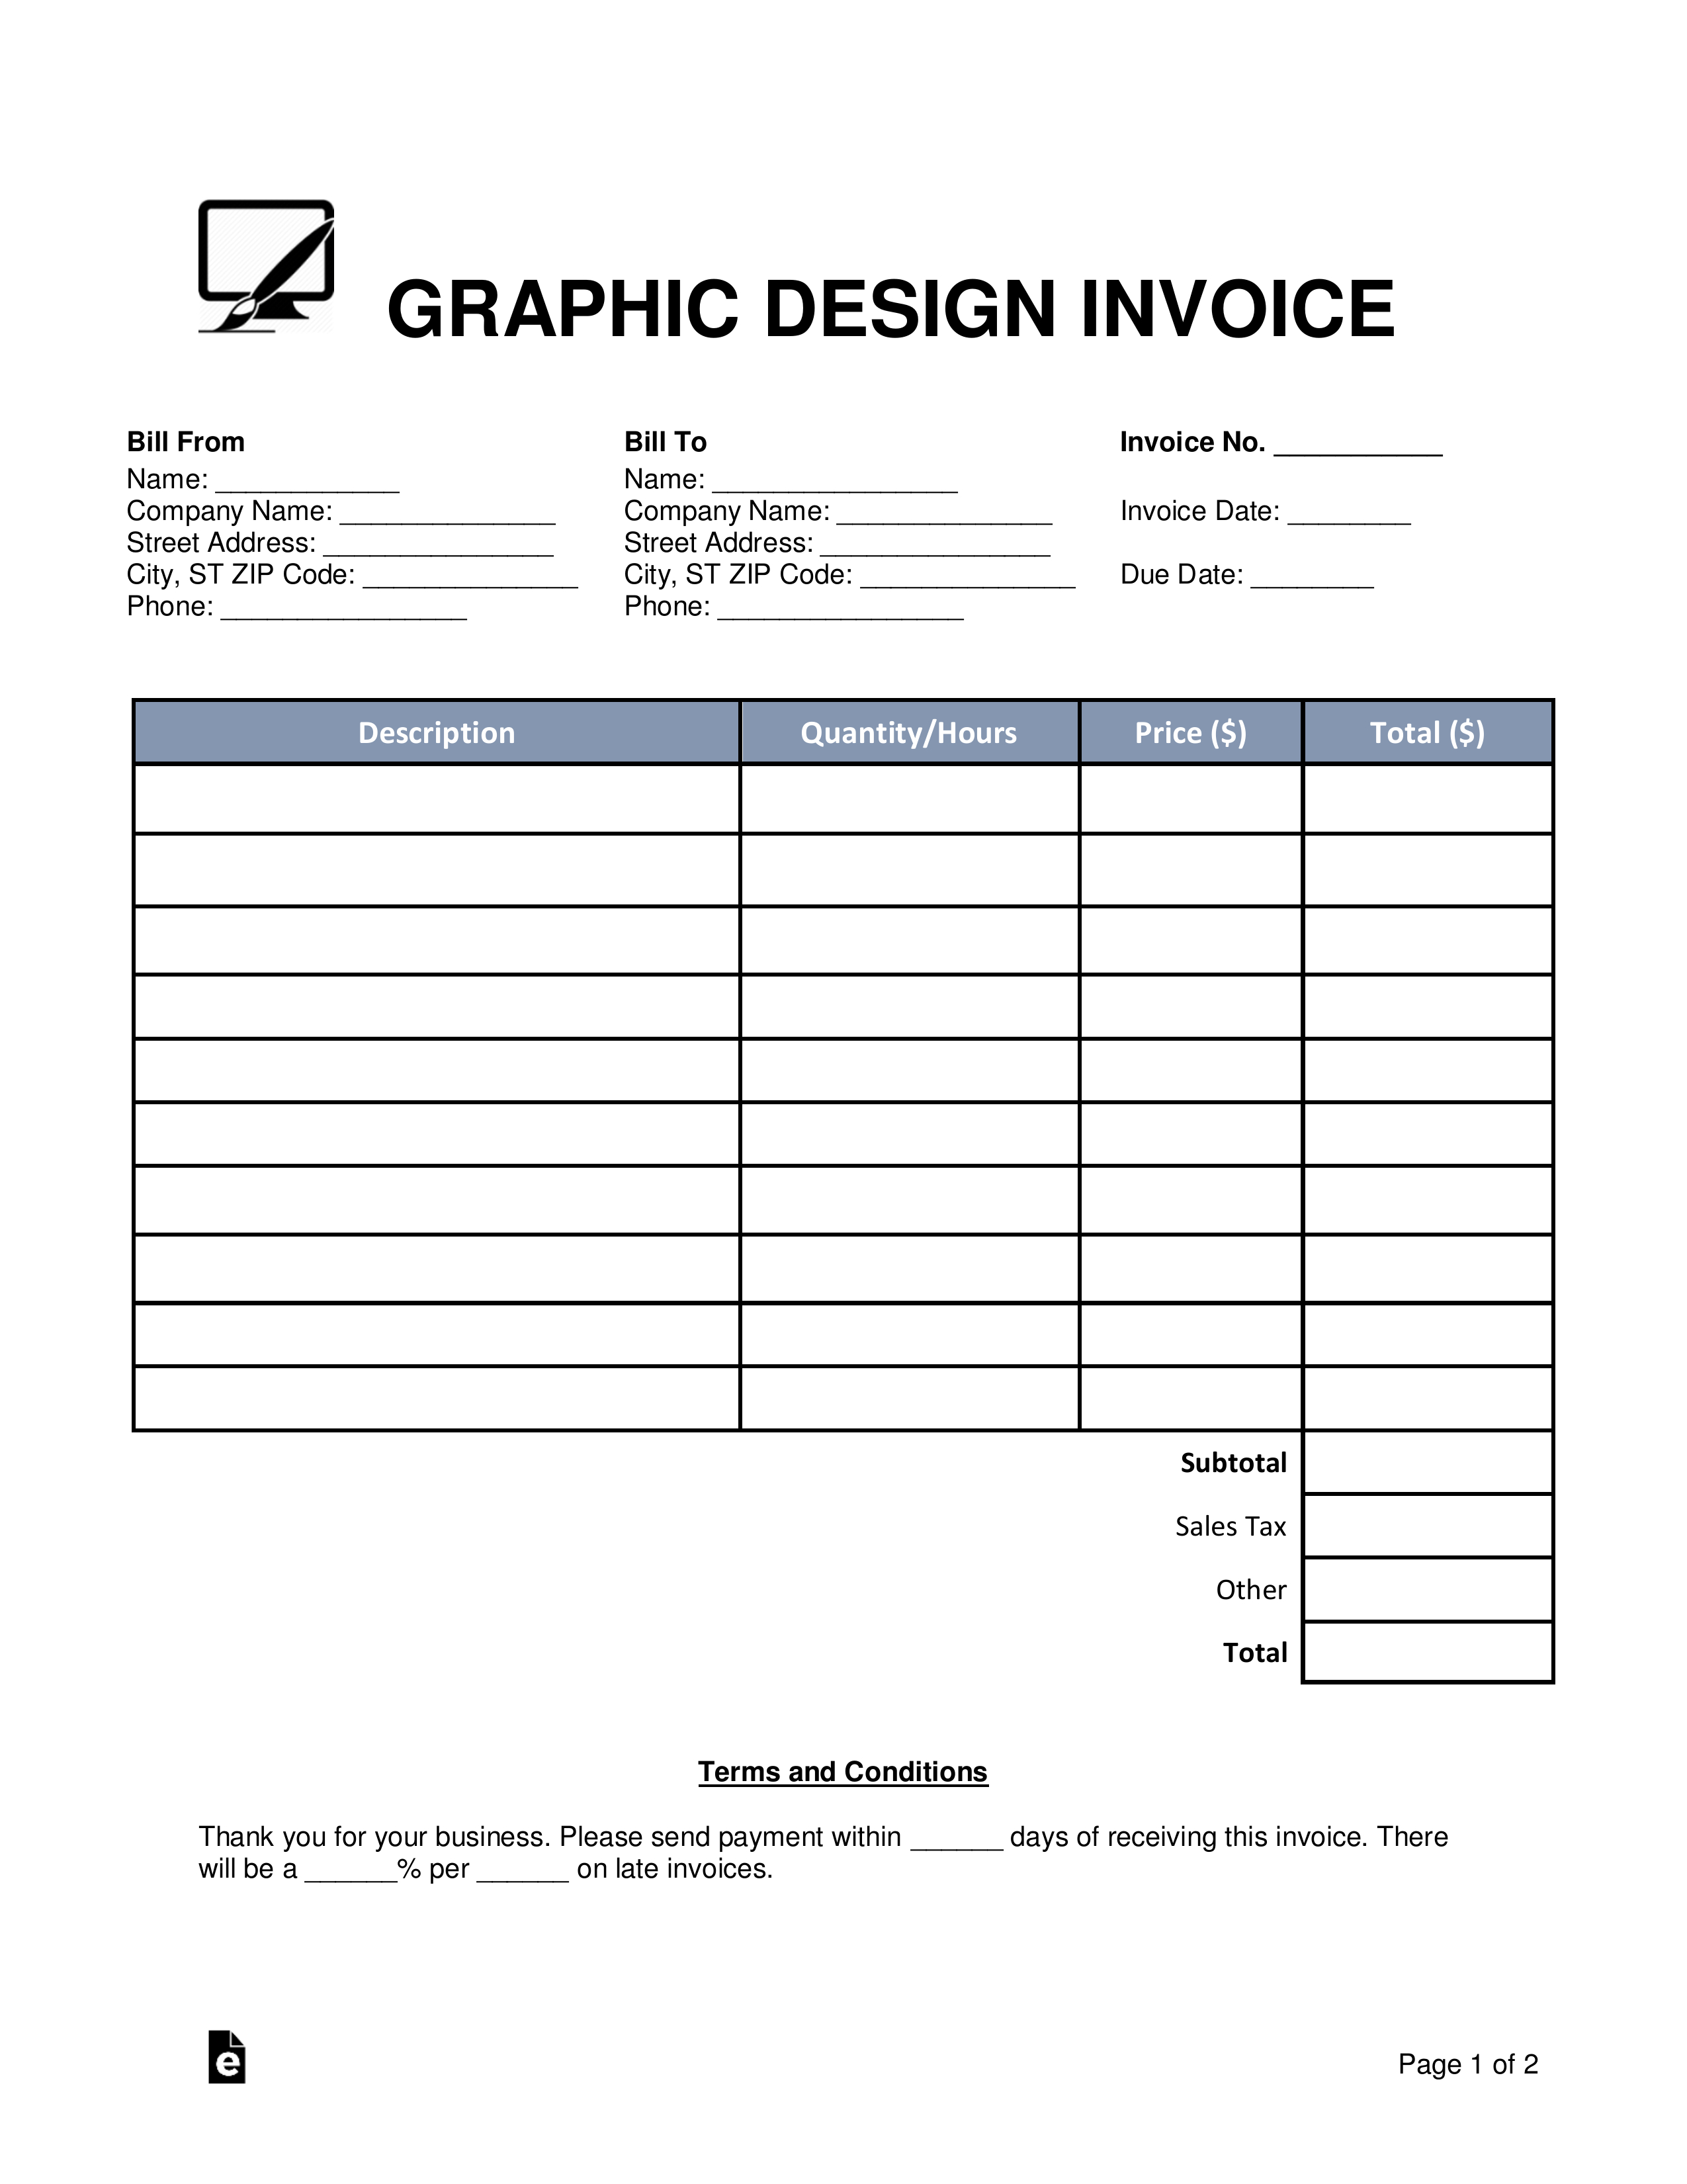 Free Graphic Design Invoice Template - Word | Pdf | Eforms regarding Graphic Design Invoice Template Word